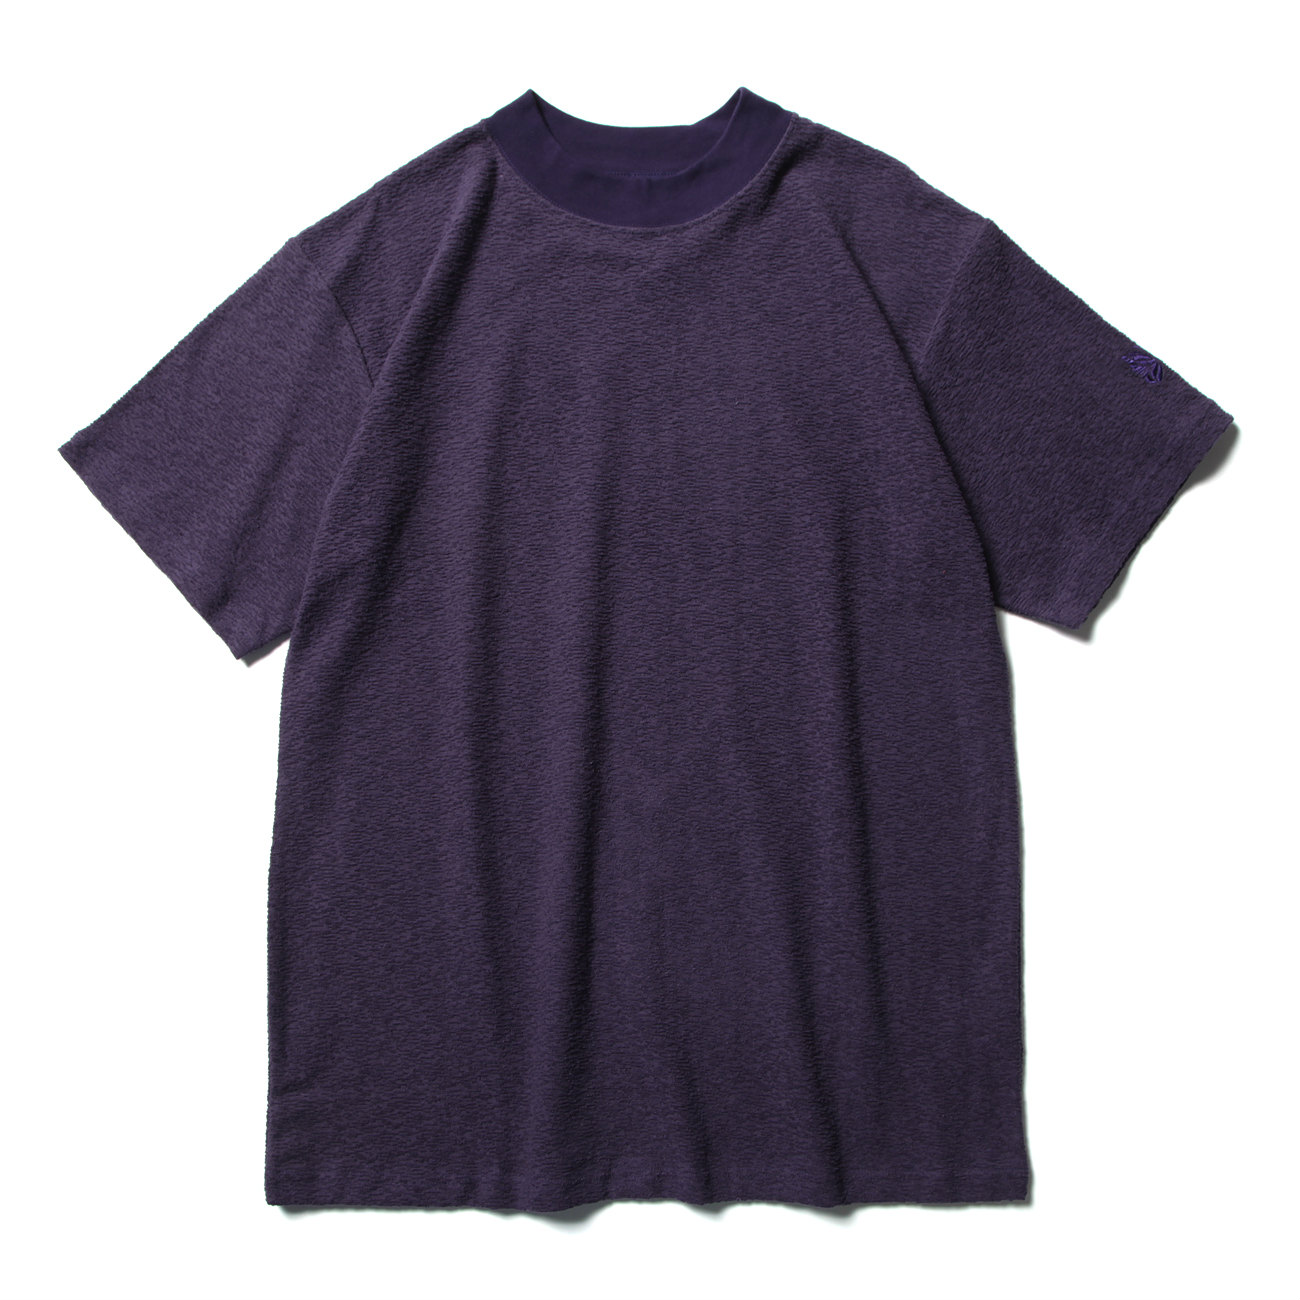 S/S Mock Neck Tee - Cotton Pile Jersey - Purple